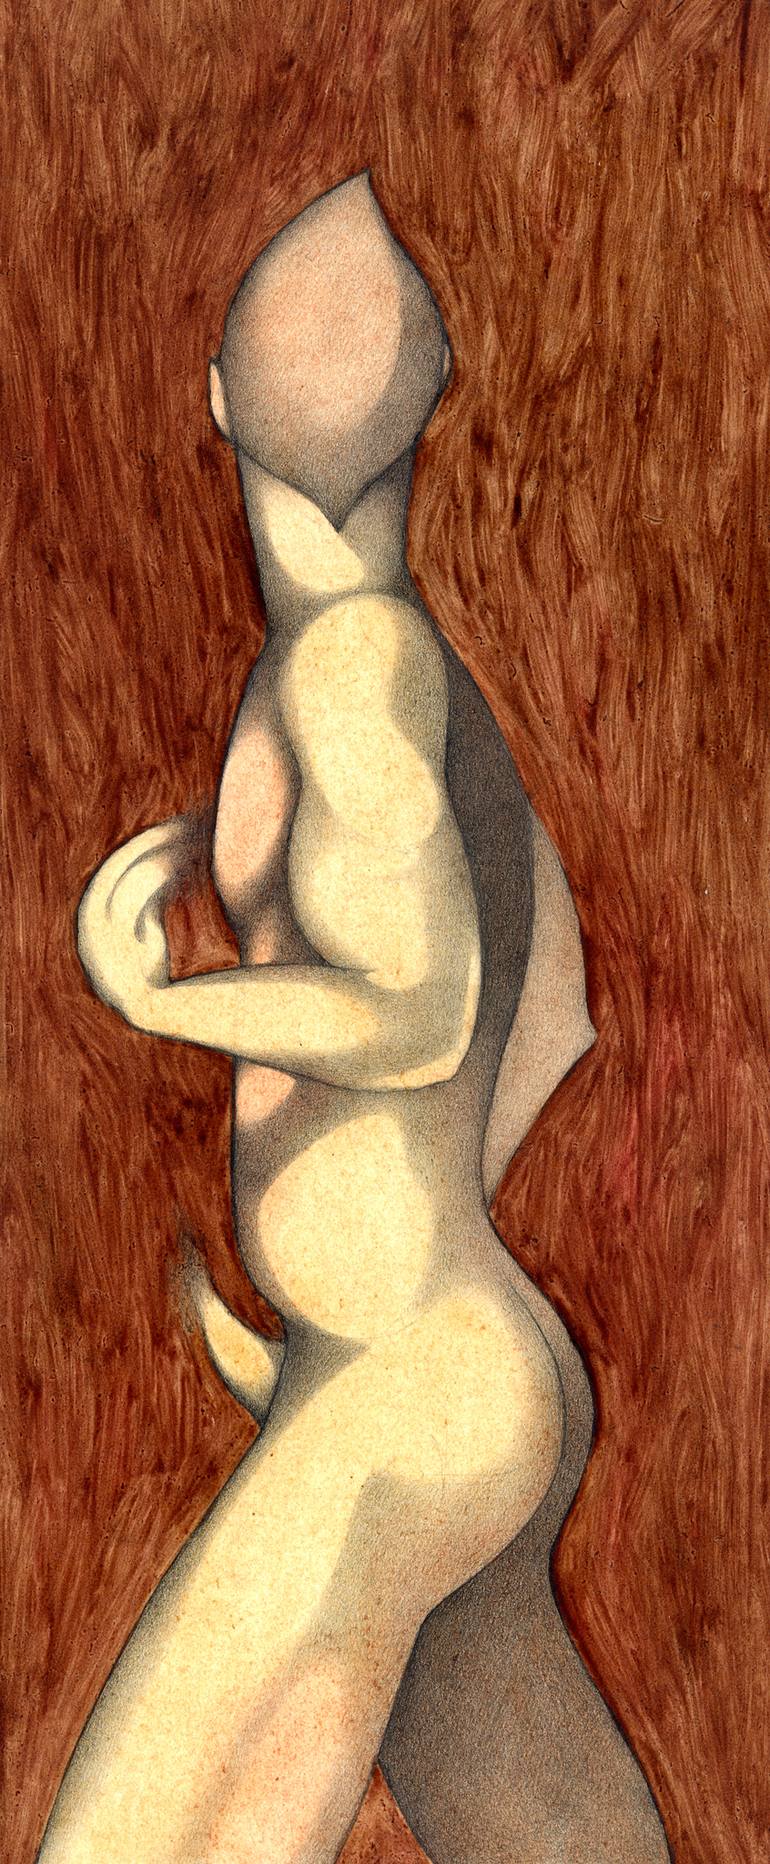 Naked Painting by Federico Cortese Saatchi image image